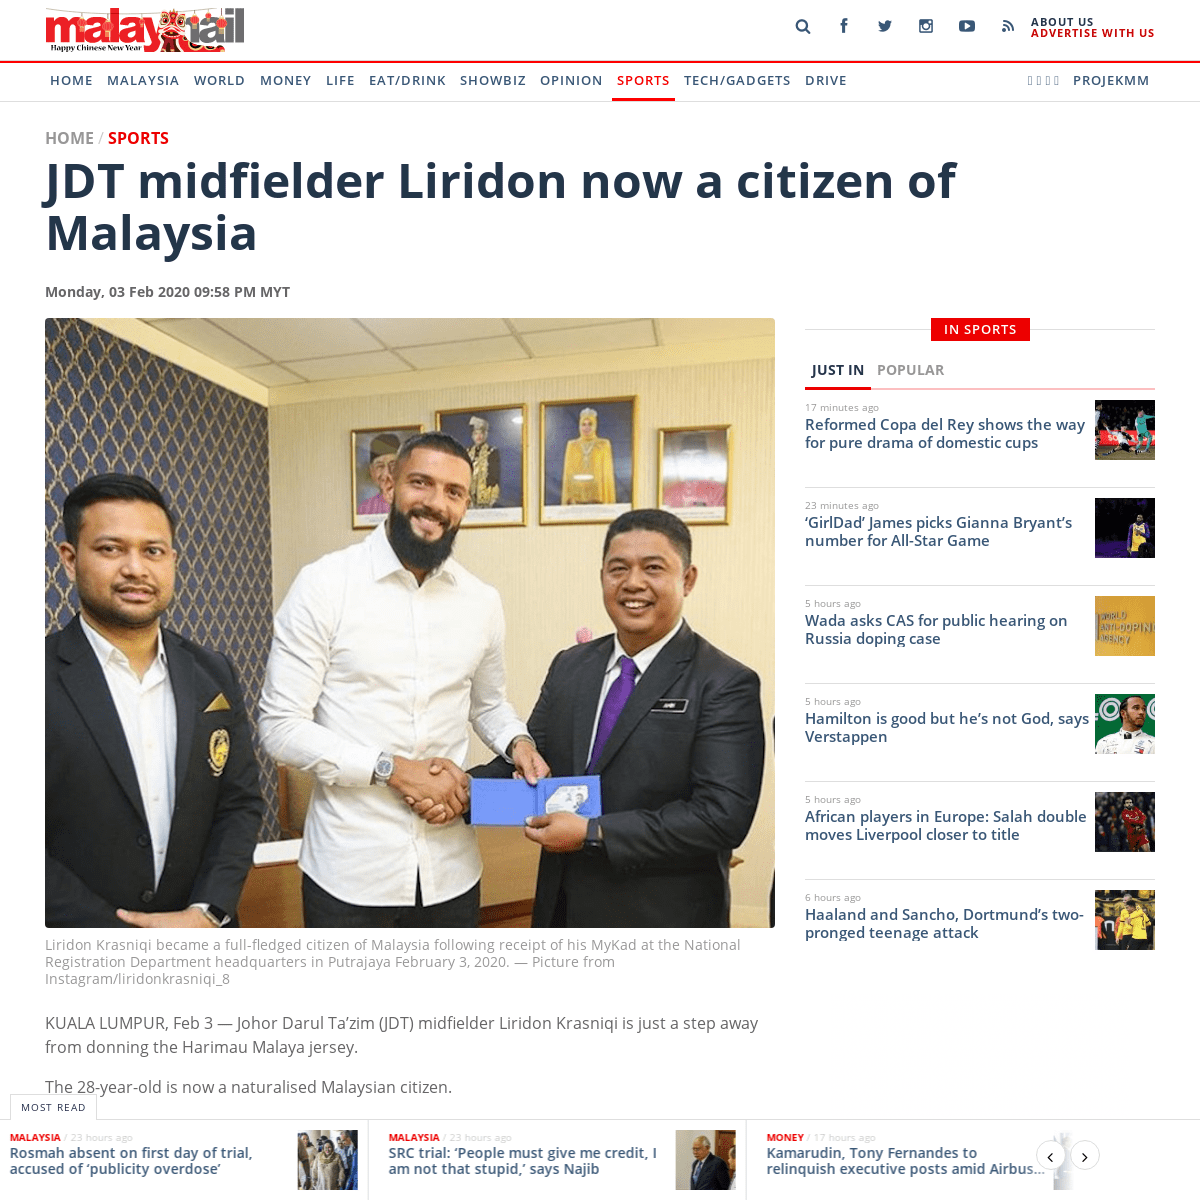 A complete backup of www.malaymail.com/news/sports/2020/02/03/jdt-midfielder-liridon-now-a-citizen-of-malaysia/1834146